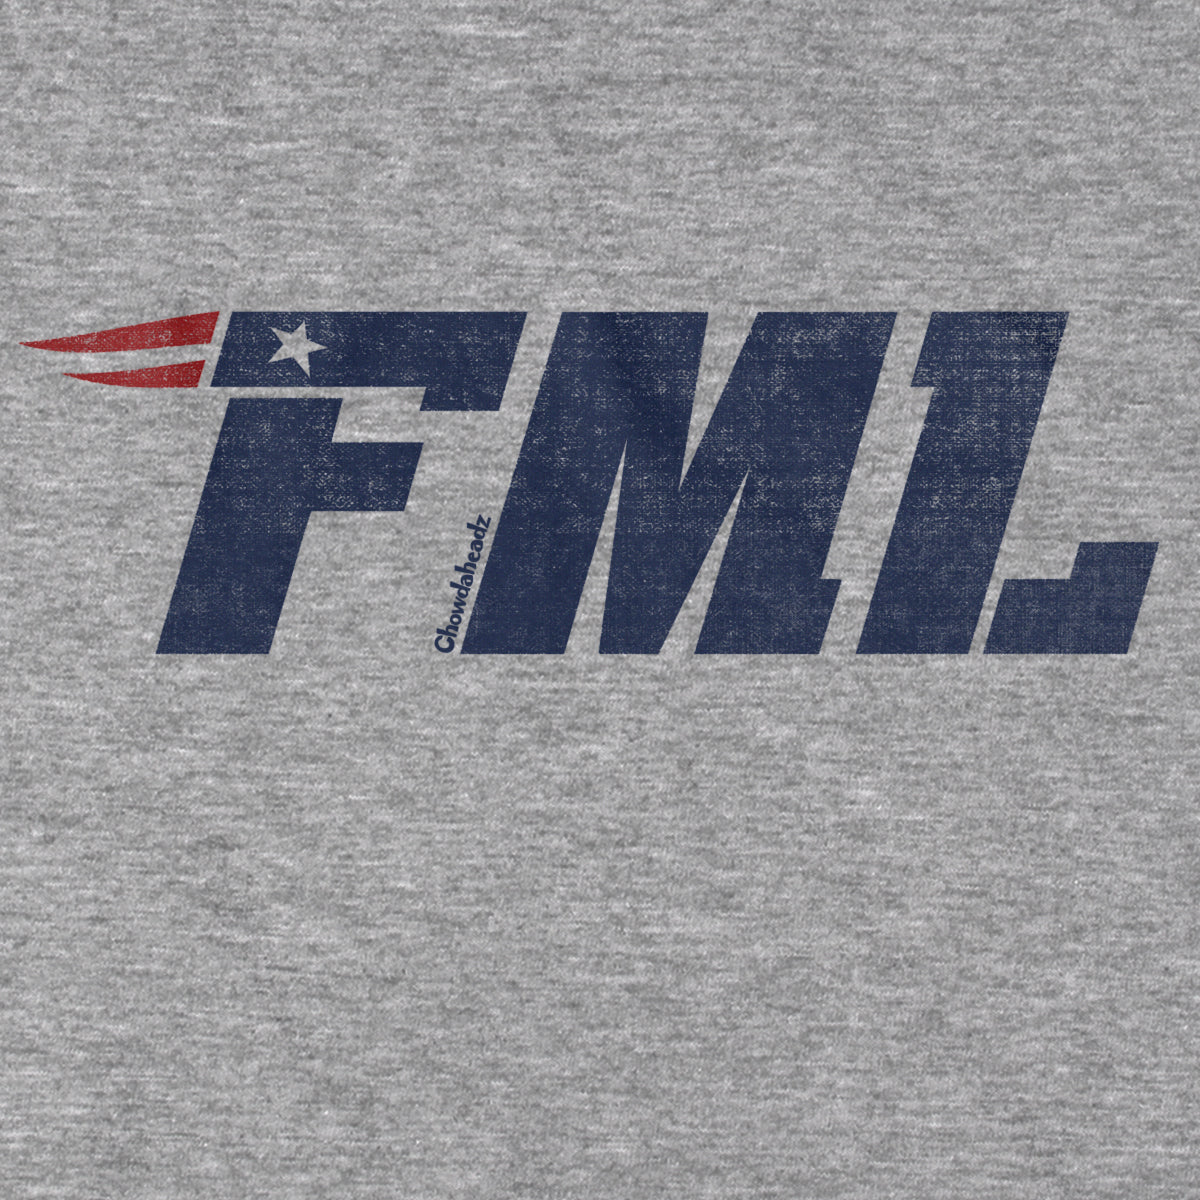 FML New England T-Shirt - Chowdaheadz